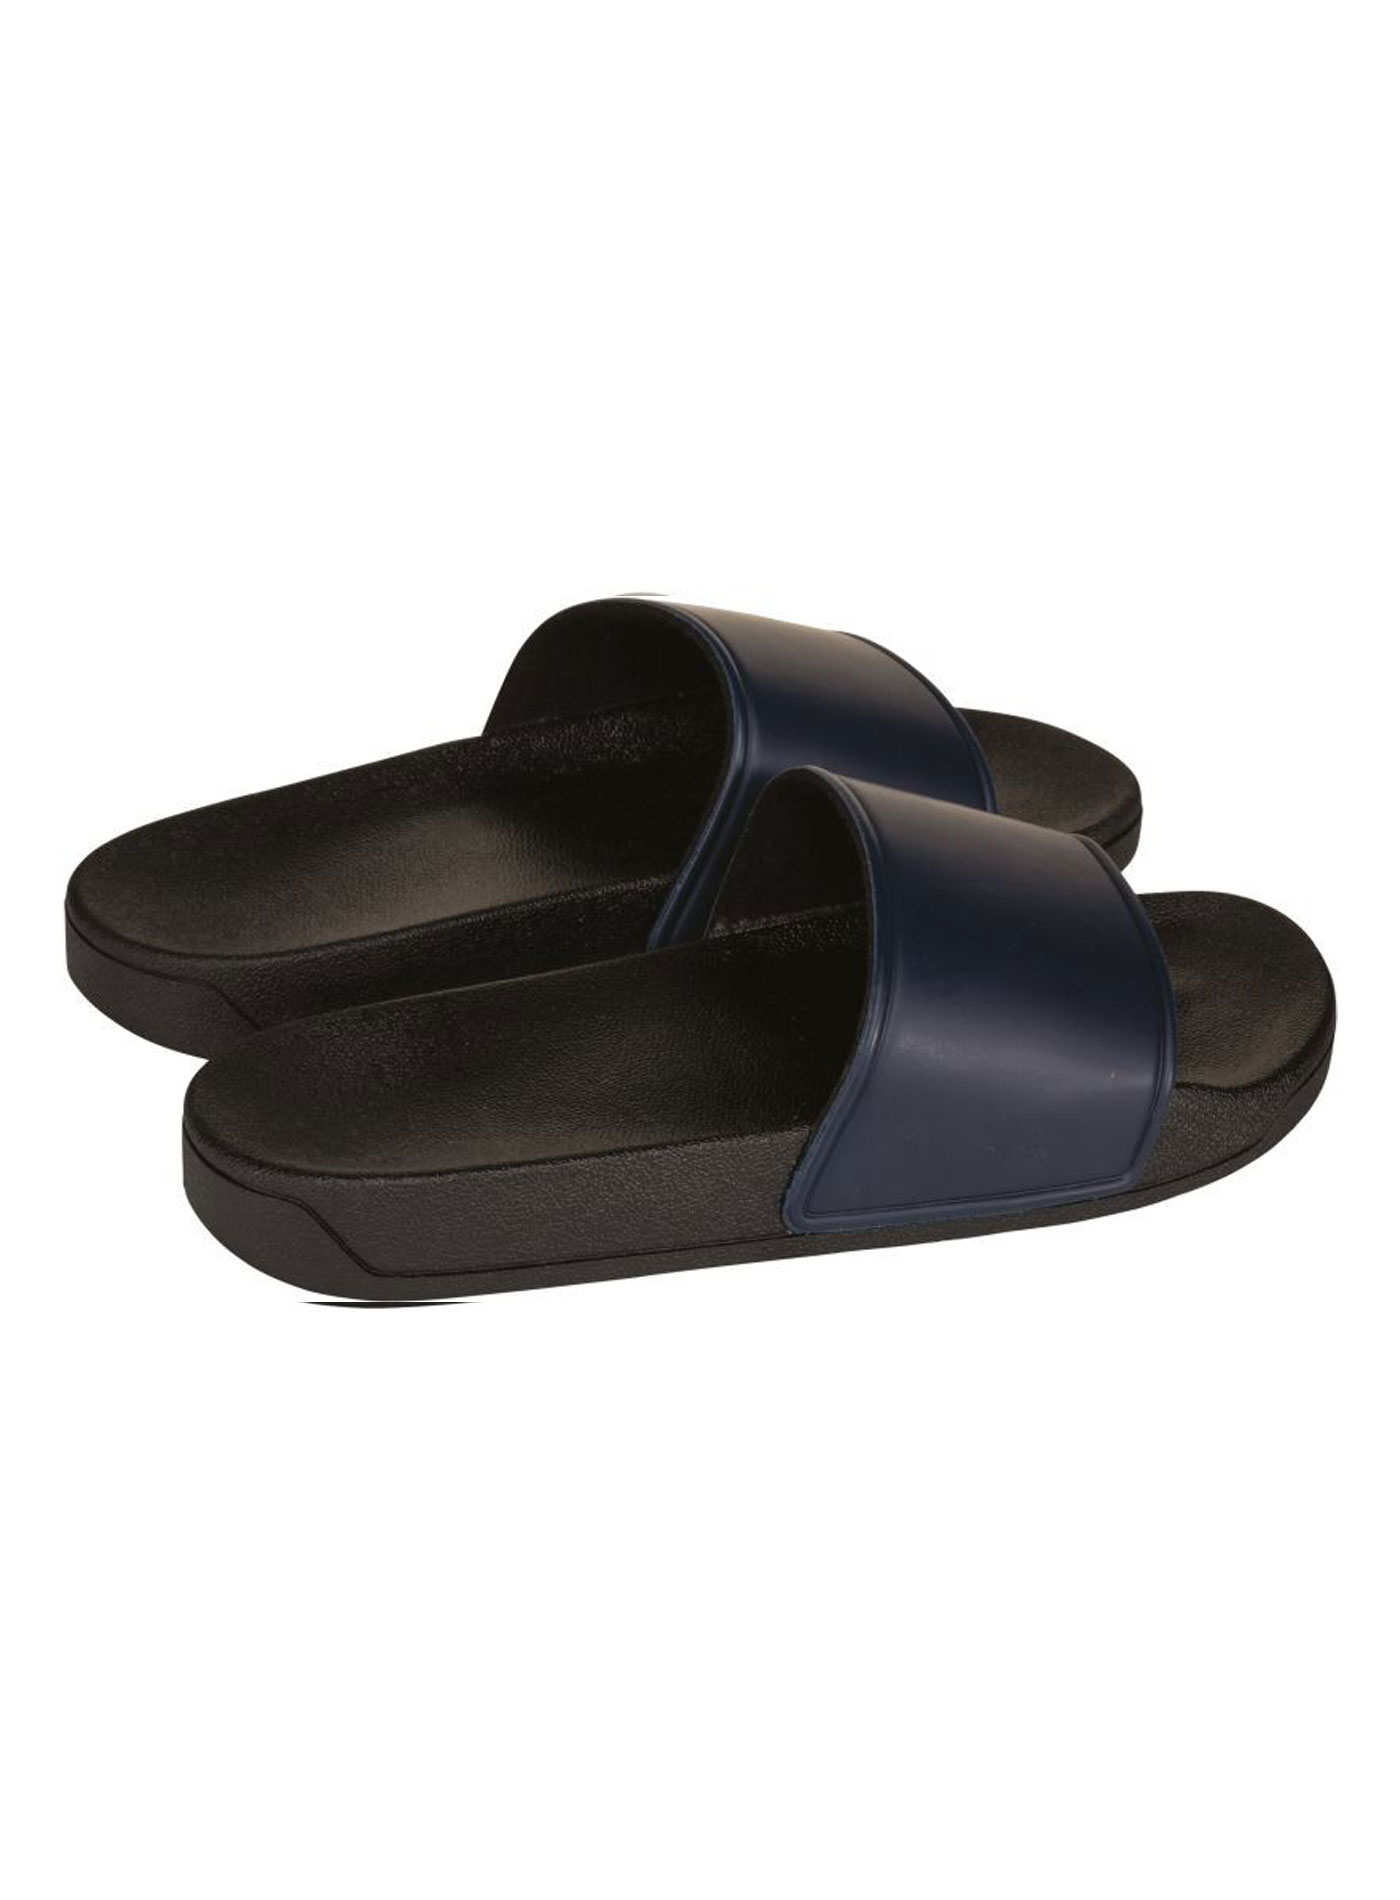 Pantofle Proact - Modrá s černou 35